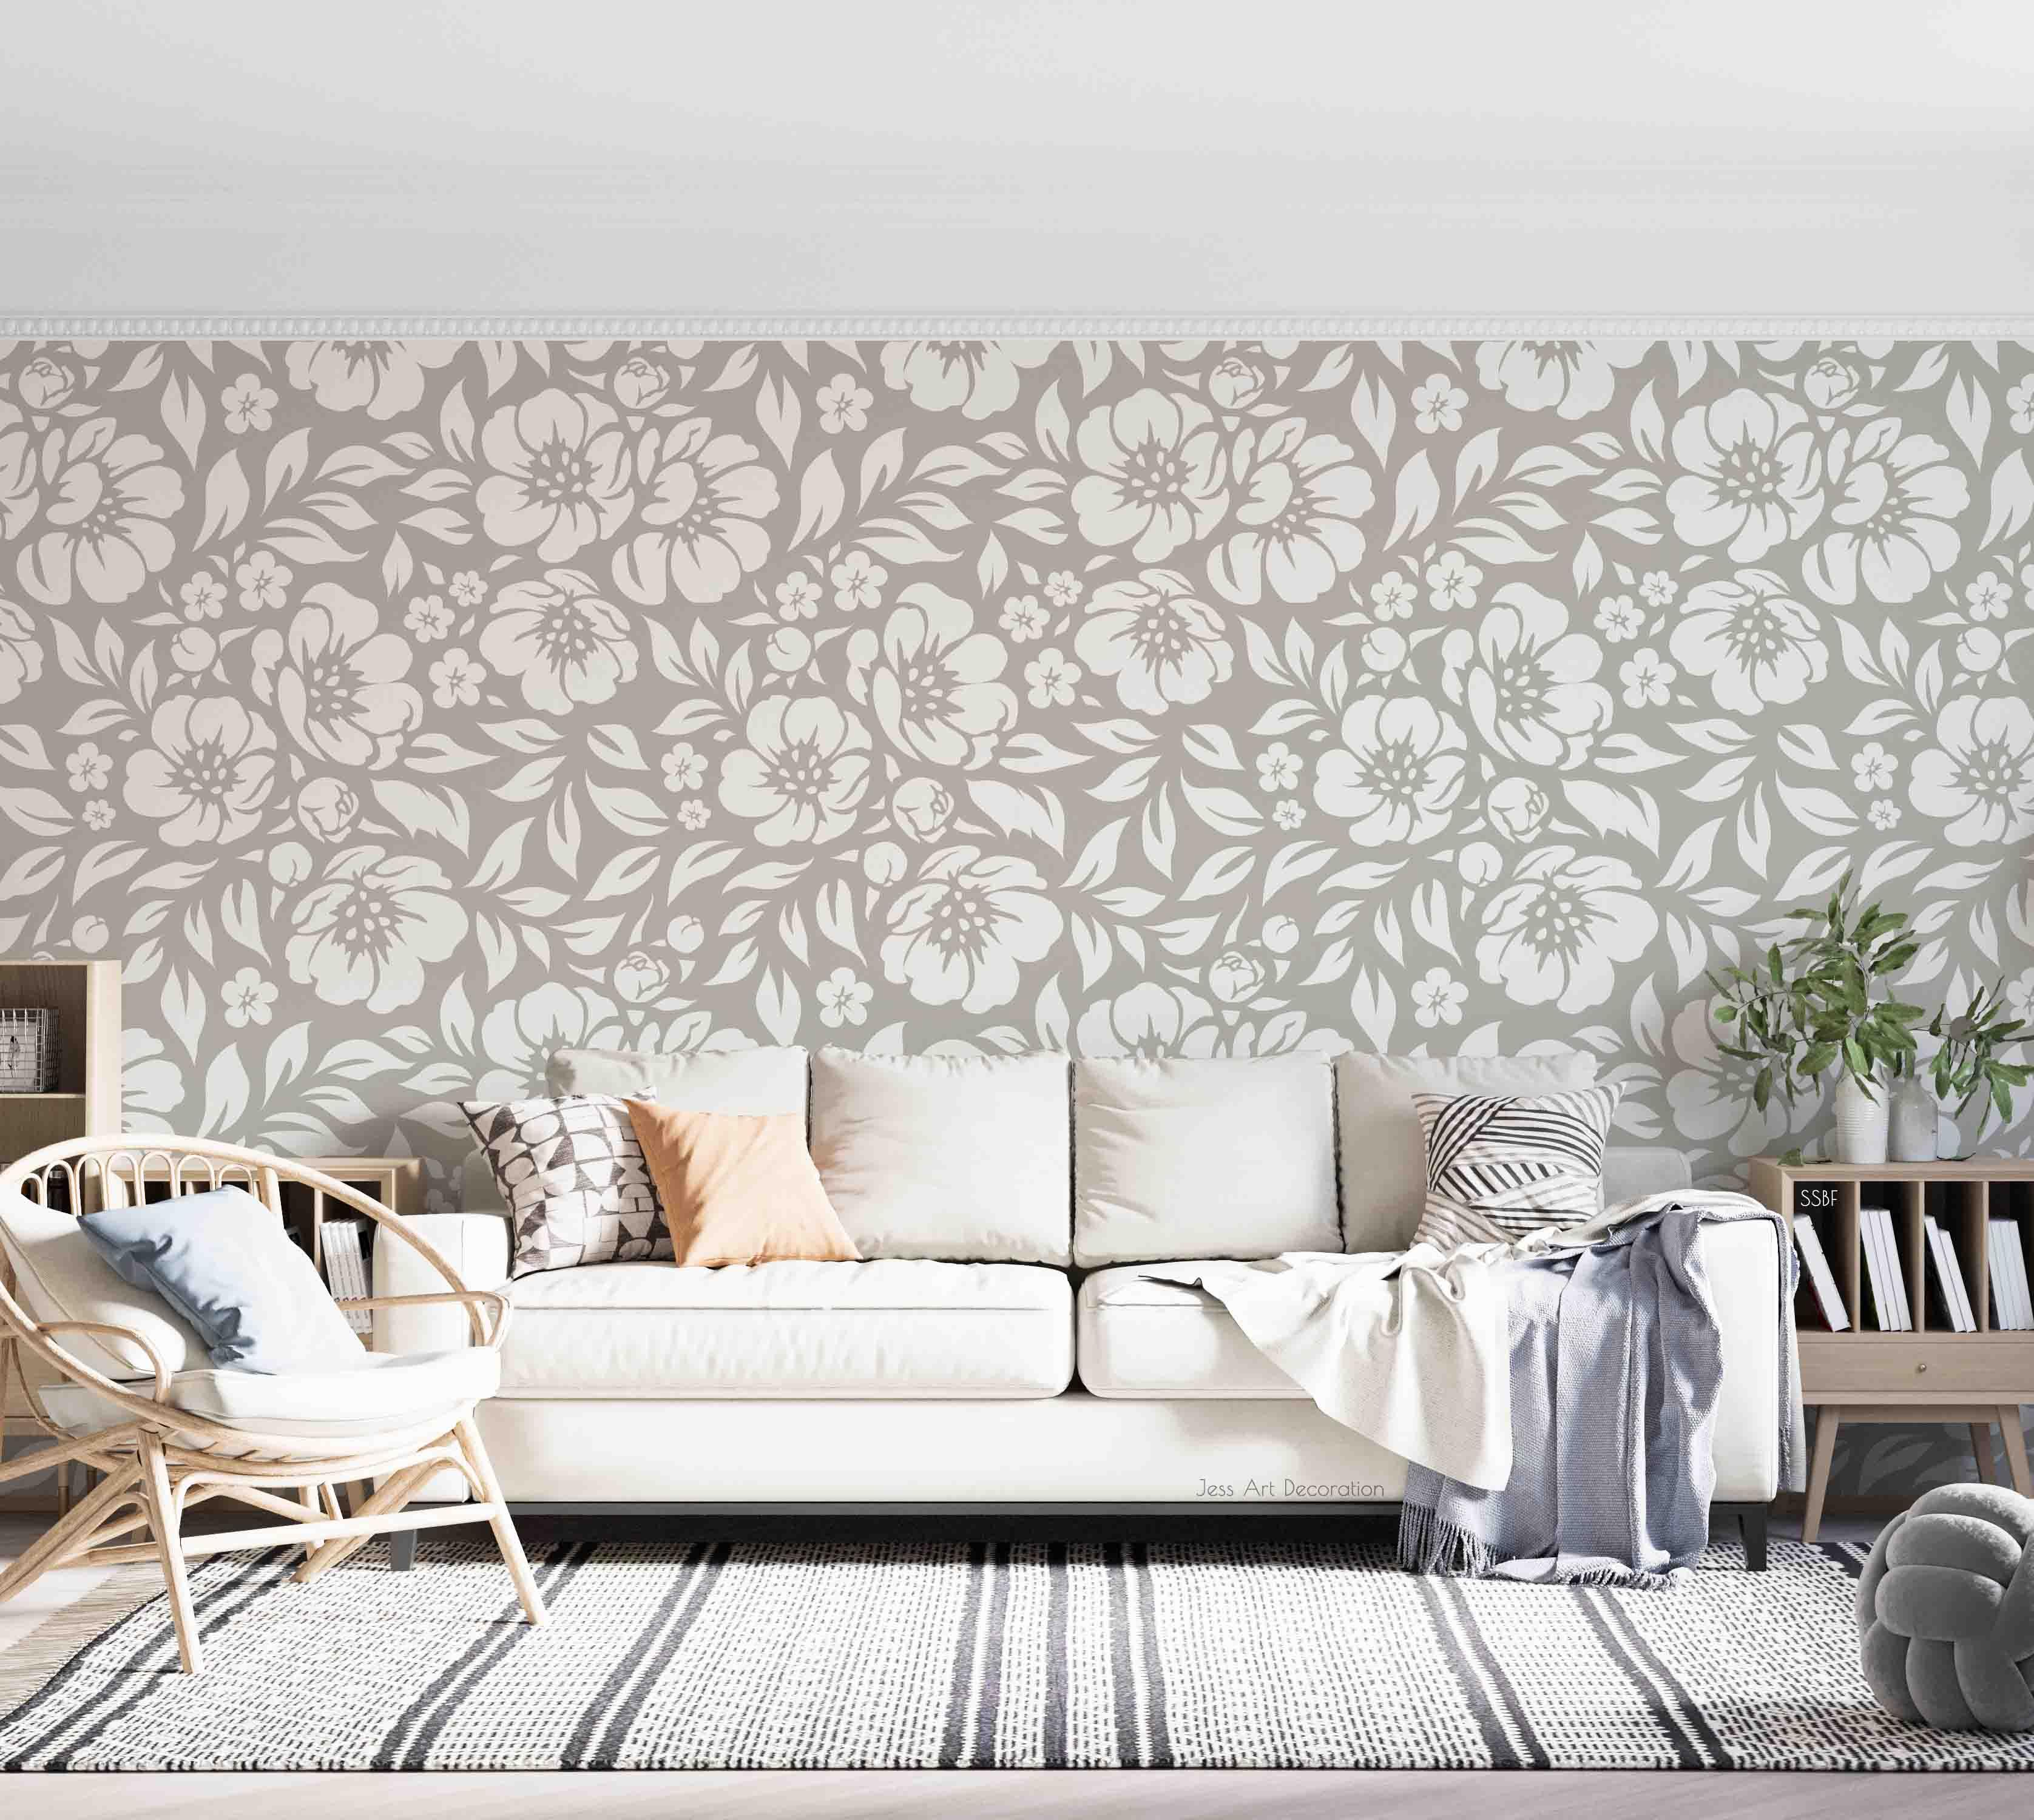 3D Vintage Grey Floral Background Wall Mural Wallpaper GD 3565- Jess Art Decoration